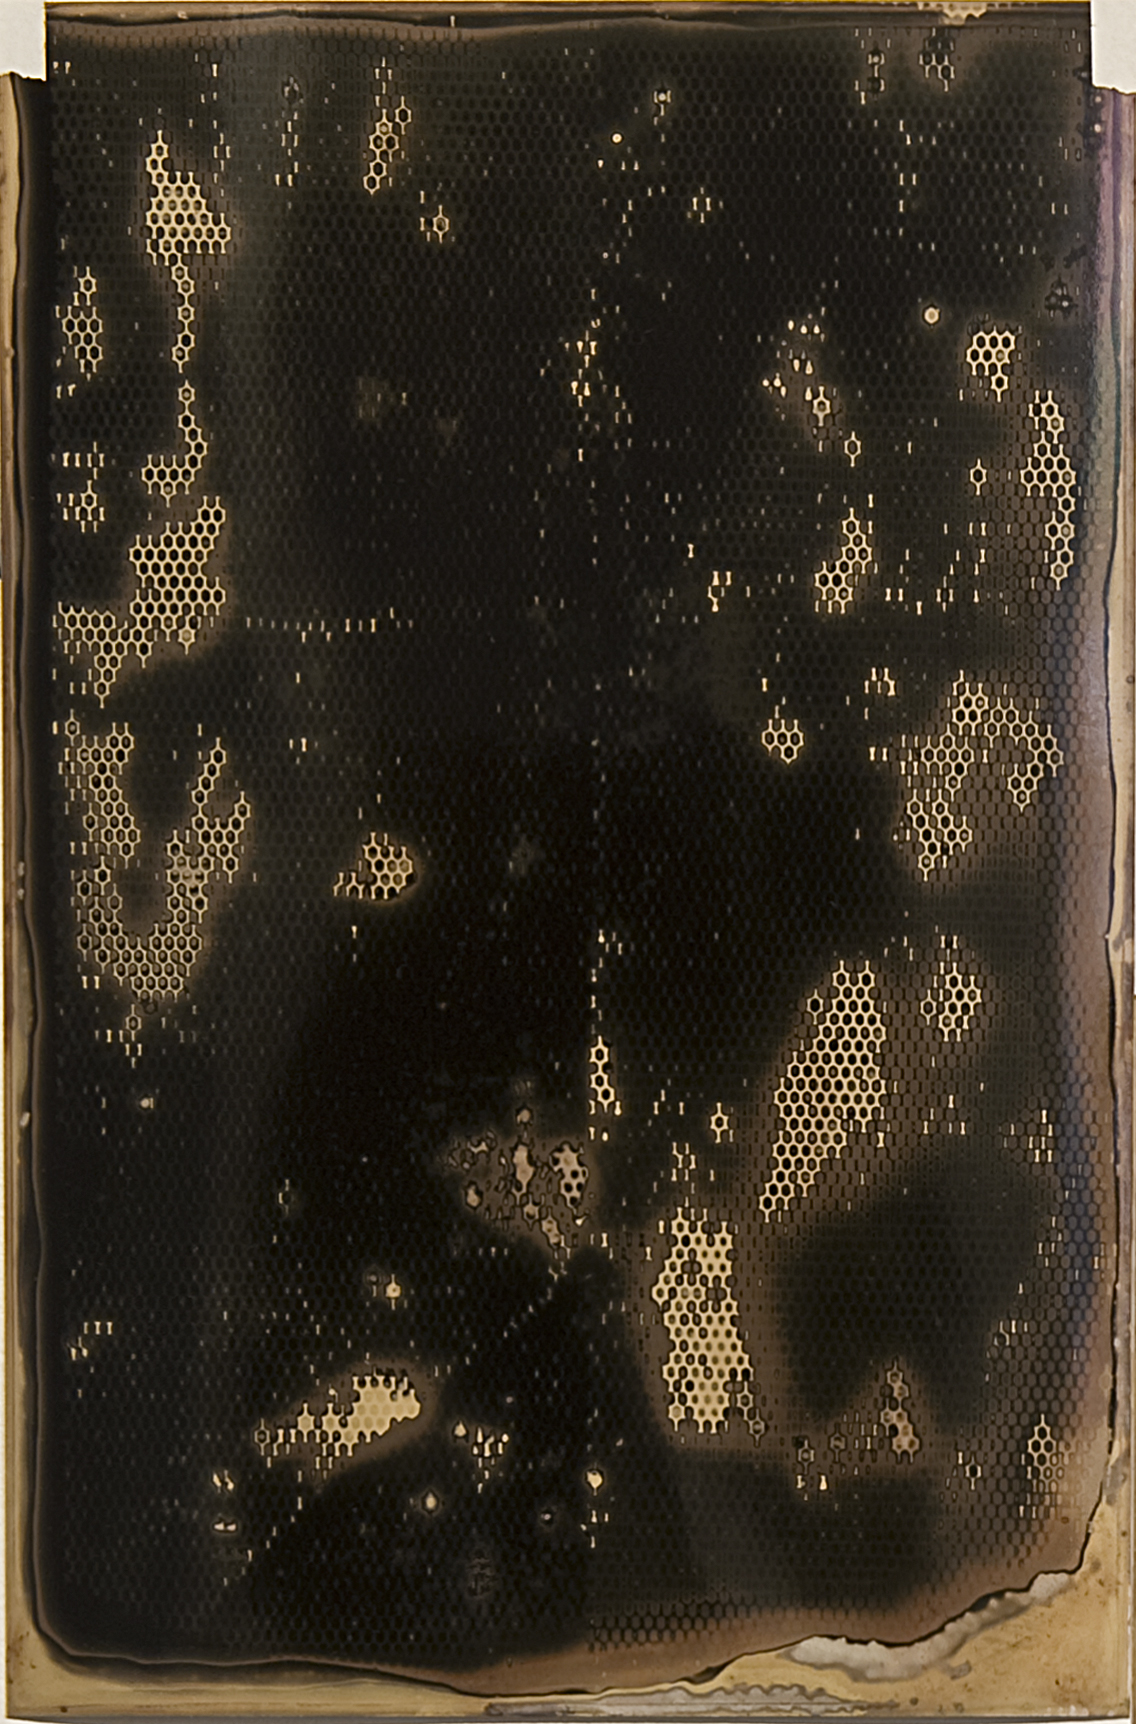 <p>Tending to Black (2014), detail, black photographs printed with acid, 153cm x 181cm</p>
